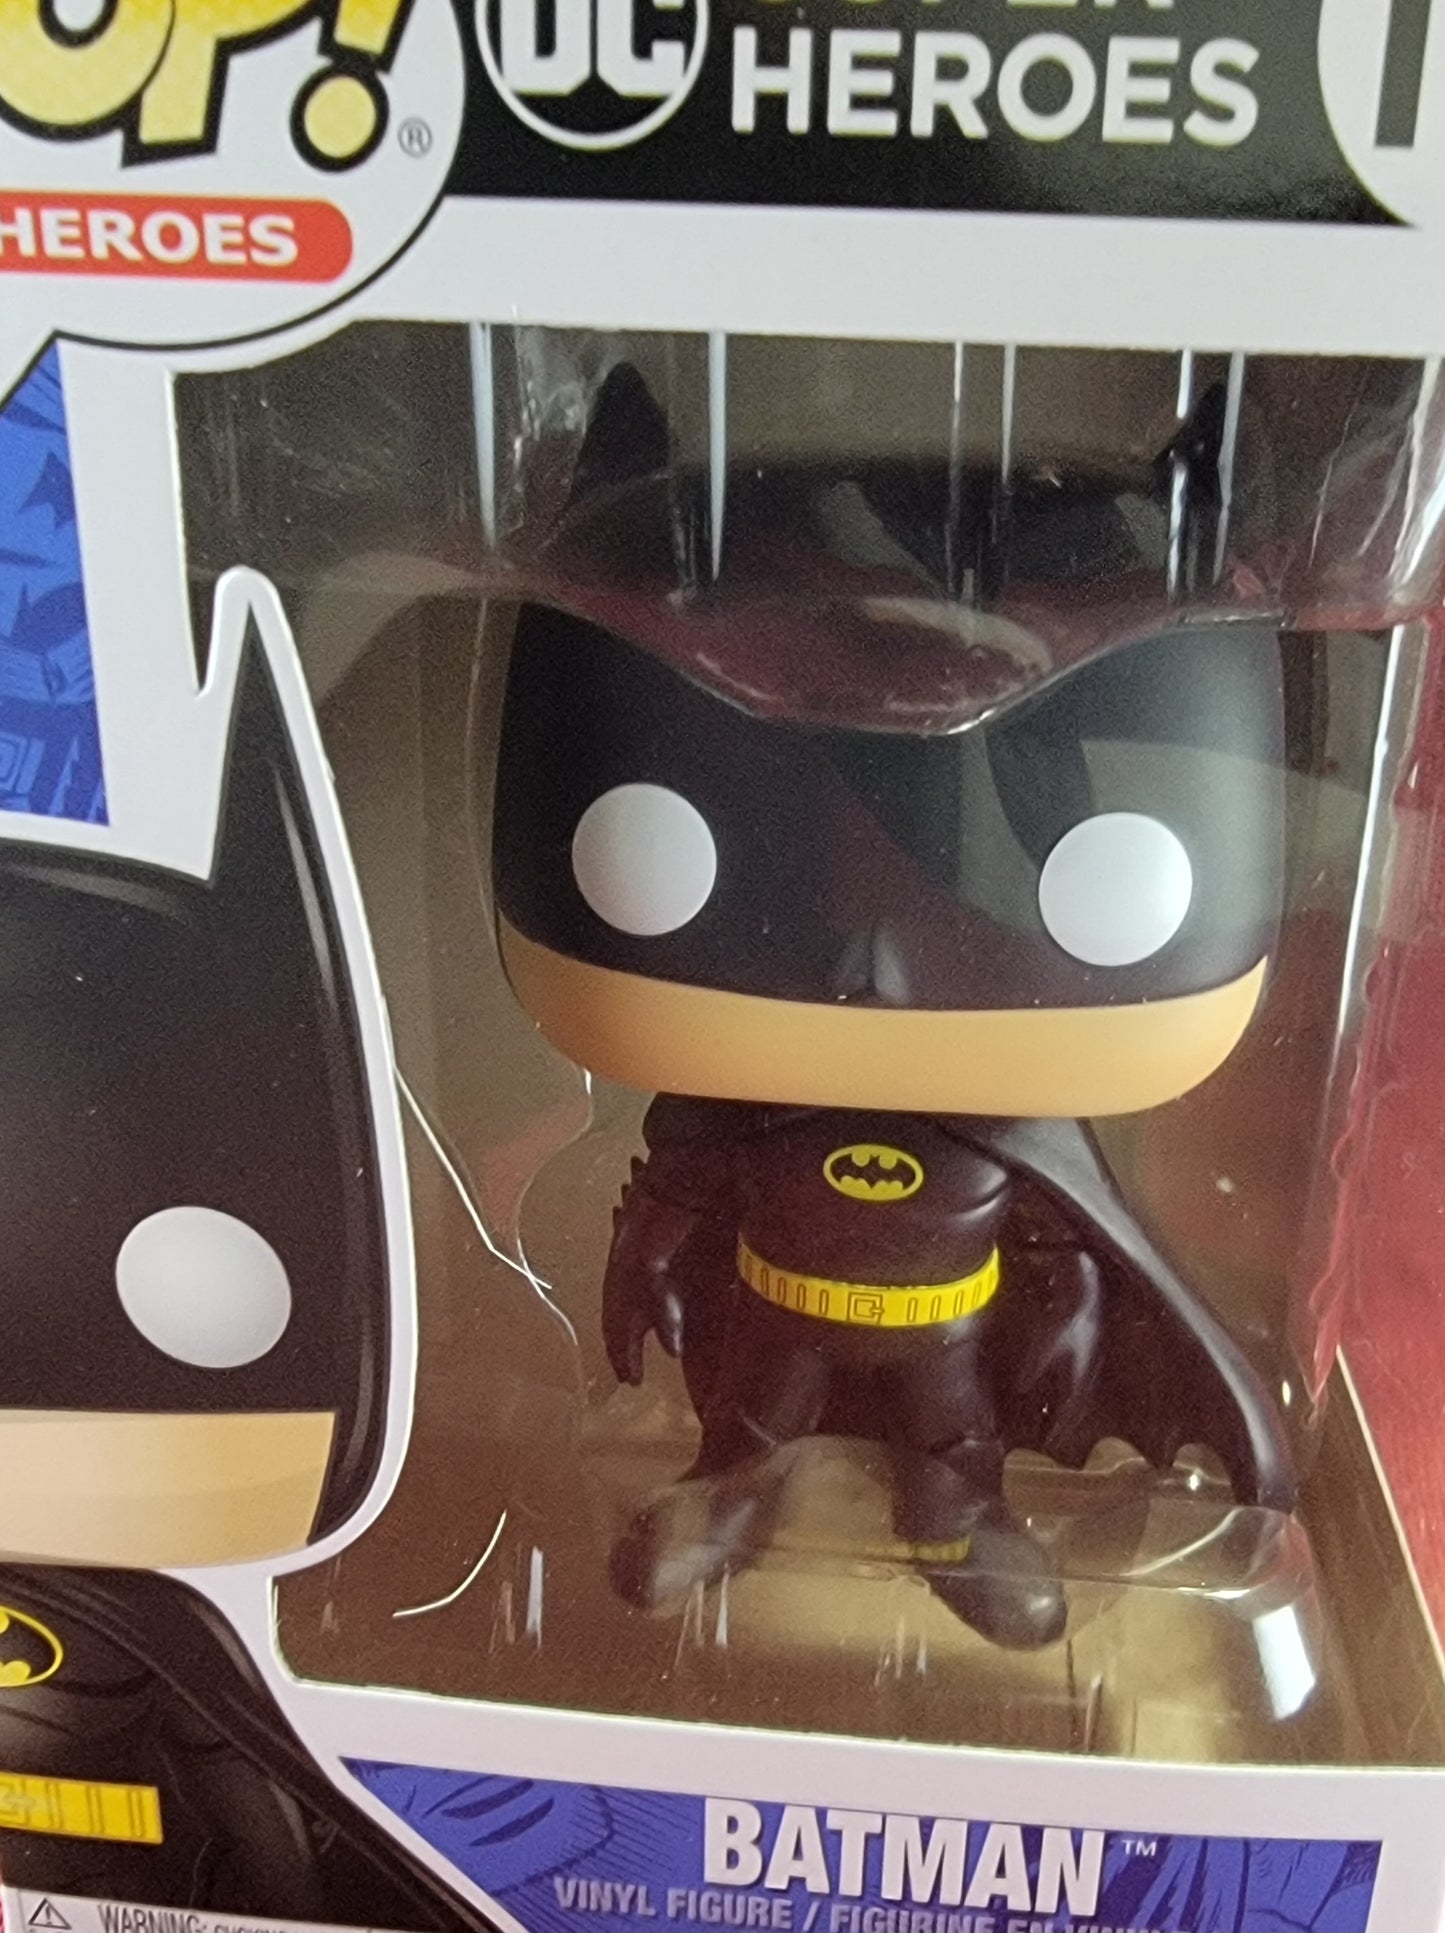 Batman funko # 144 (nib)
With pop protector